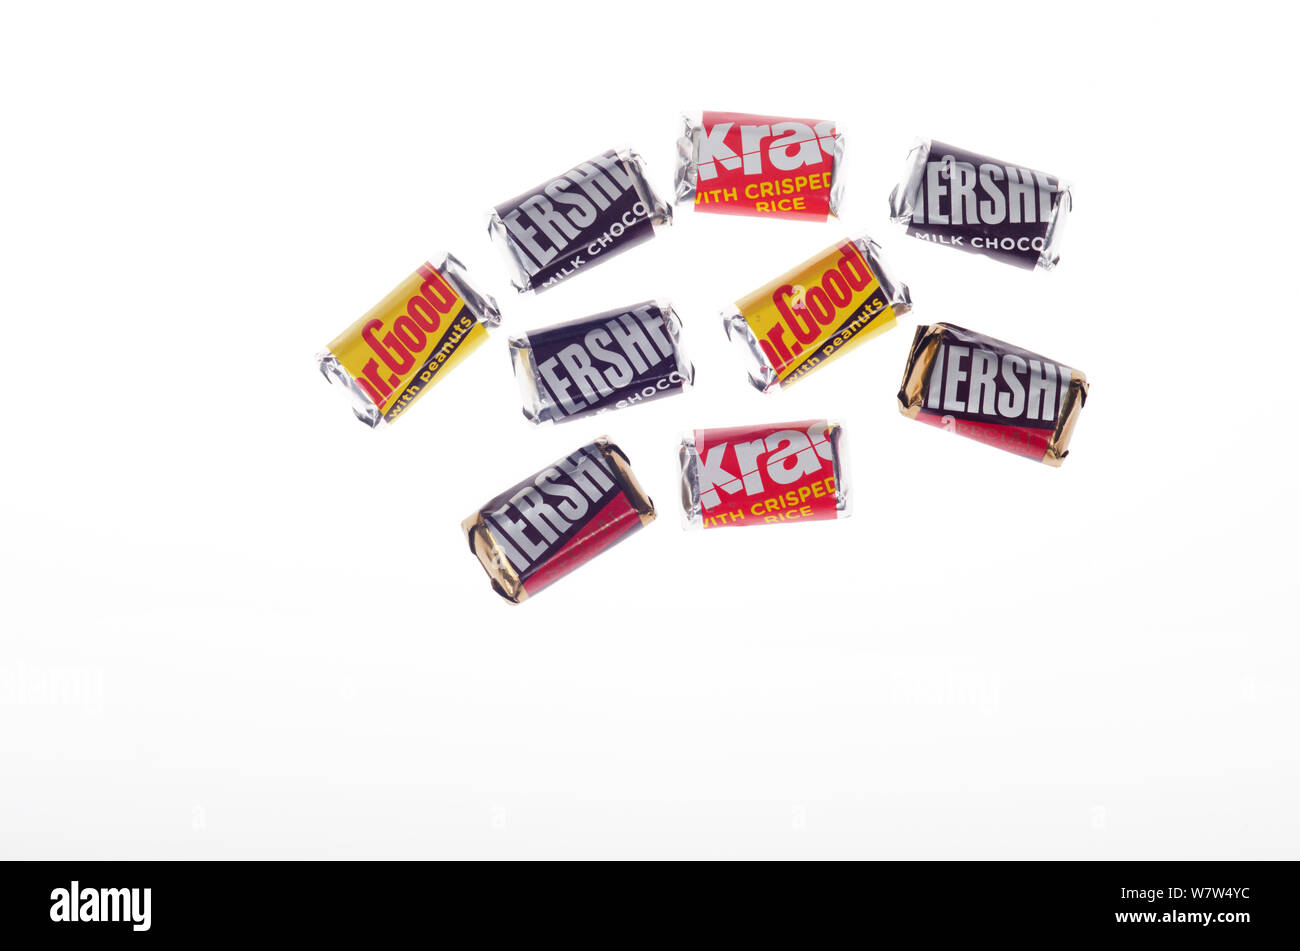 Hersheys miniatures candy bars Stock Photo